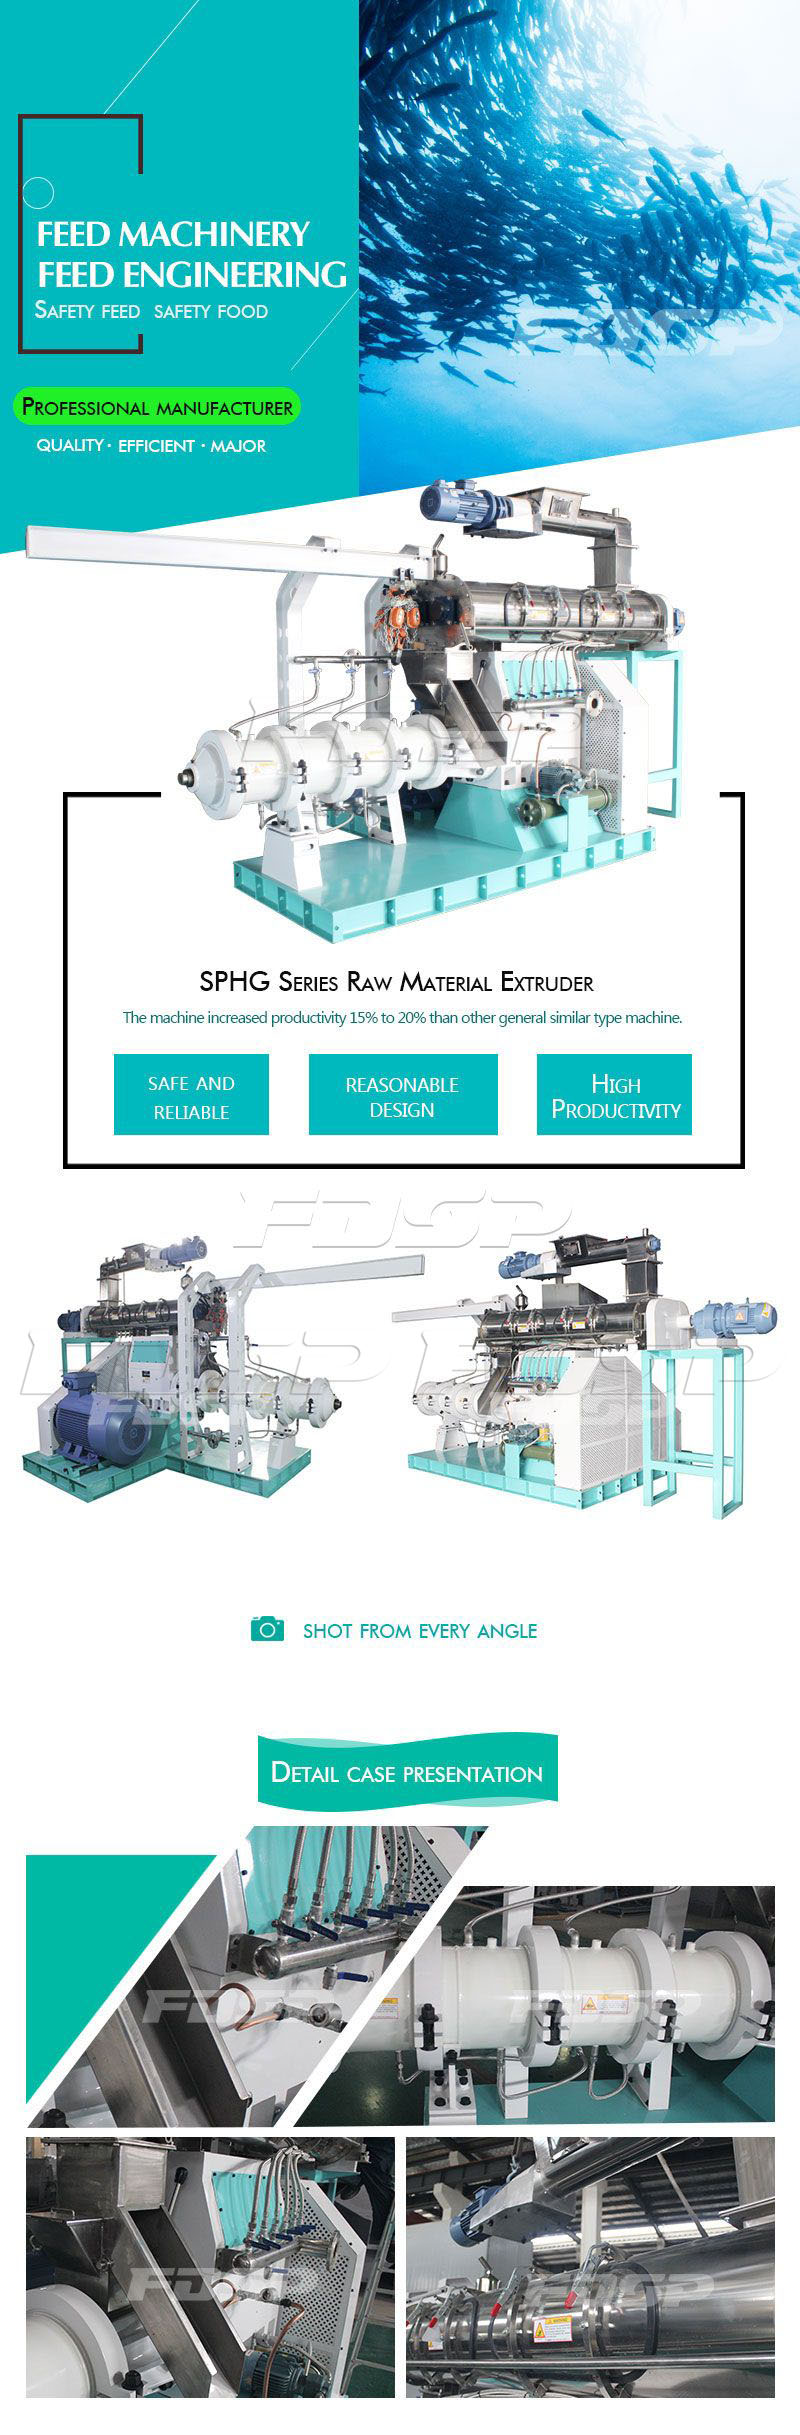 SPHG Series Raw Material Extruder